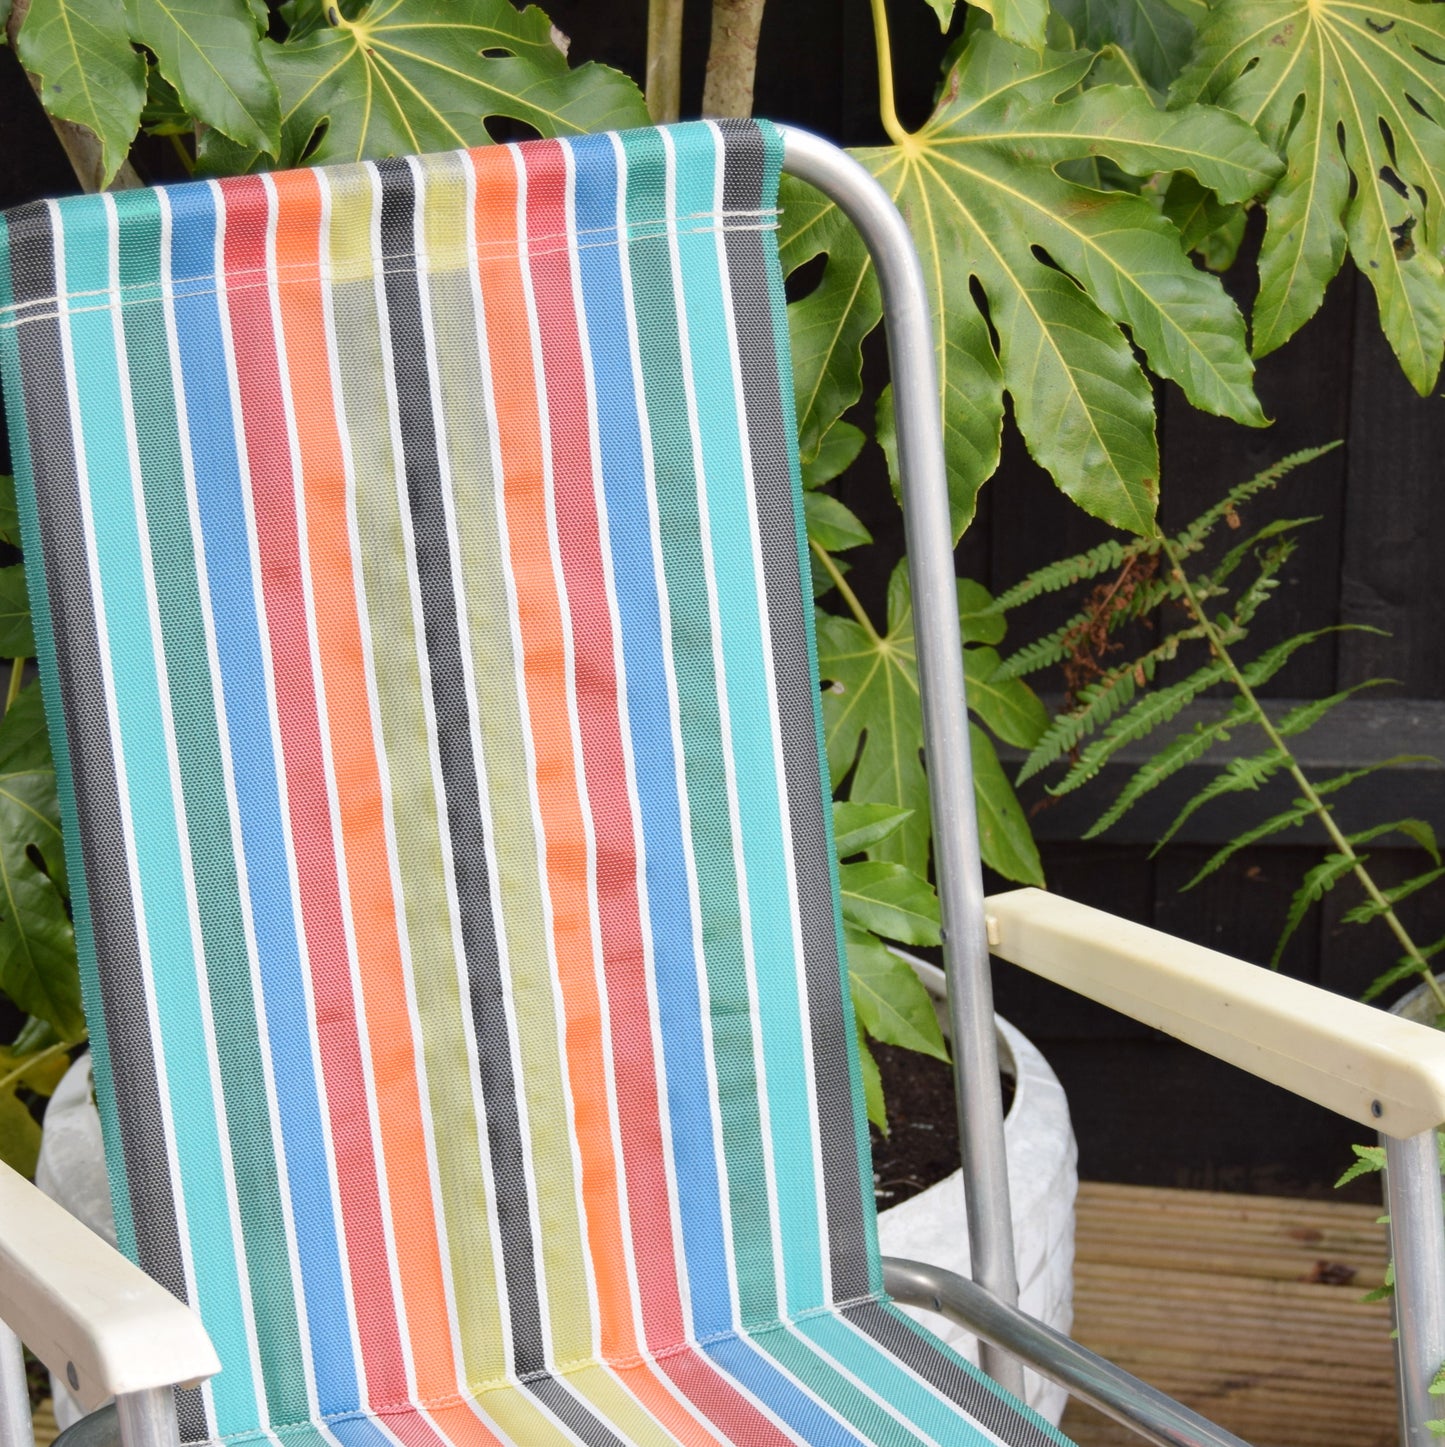 Vintage Striped 1960s Folding Garden Chair - Rainbow Stripe (2 available)